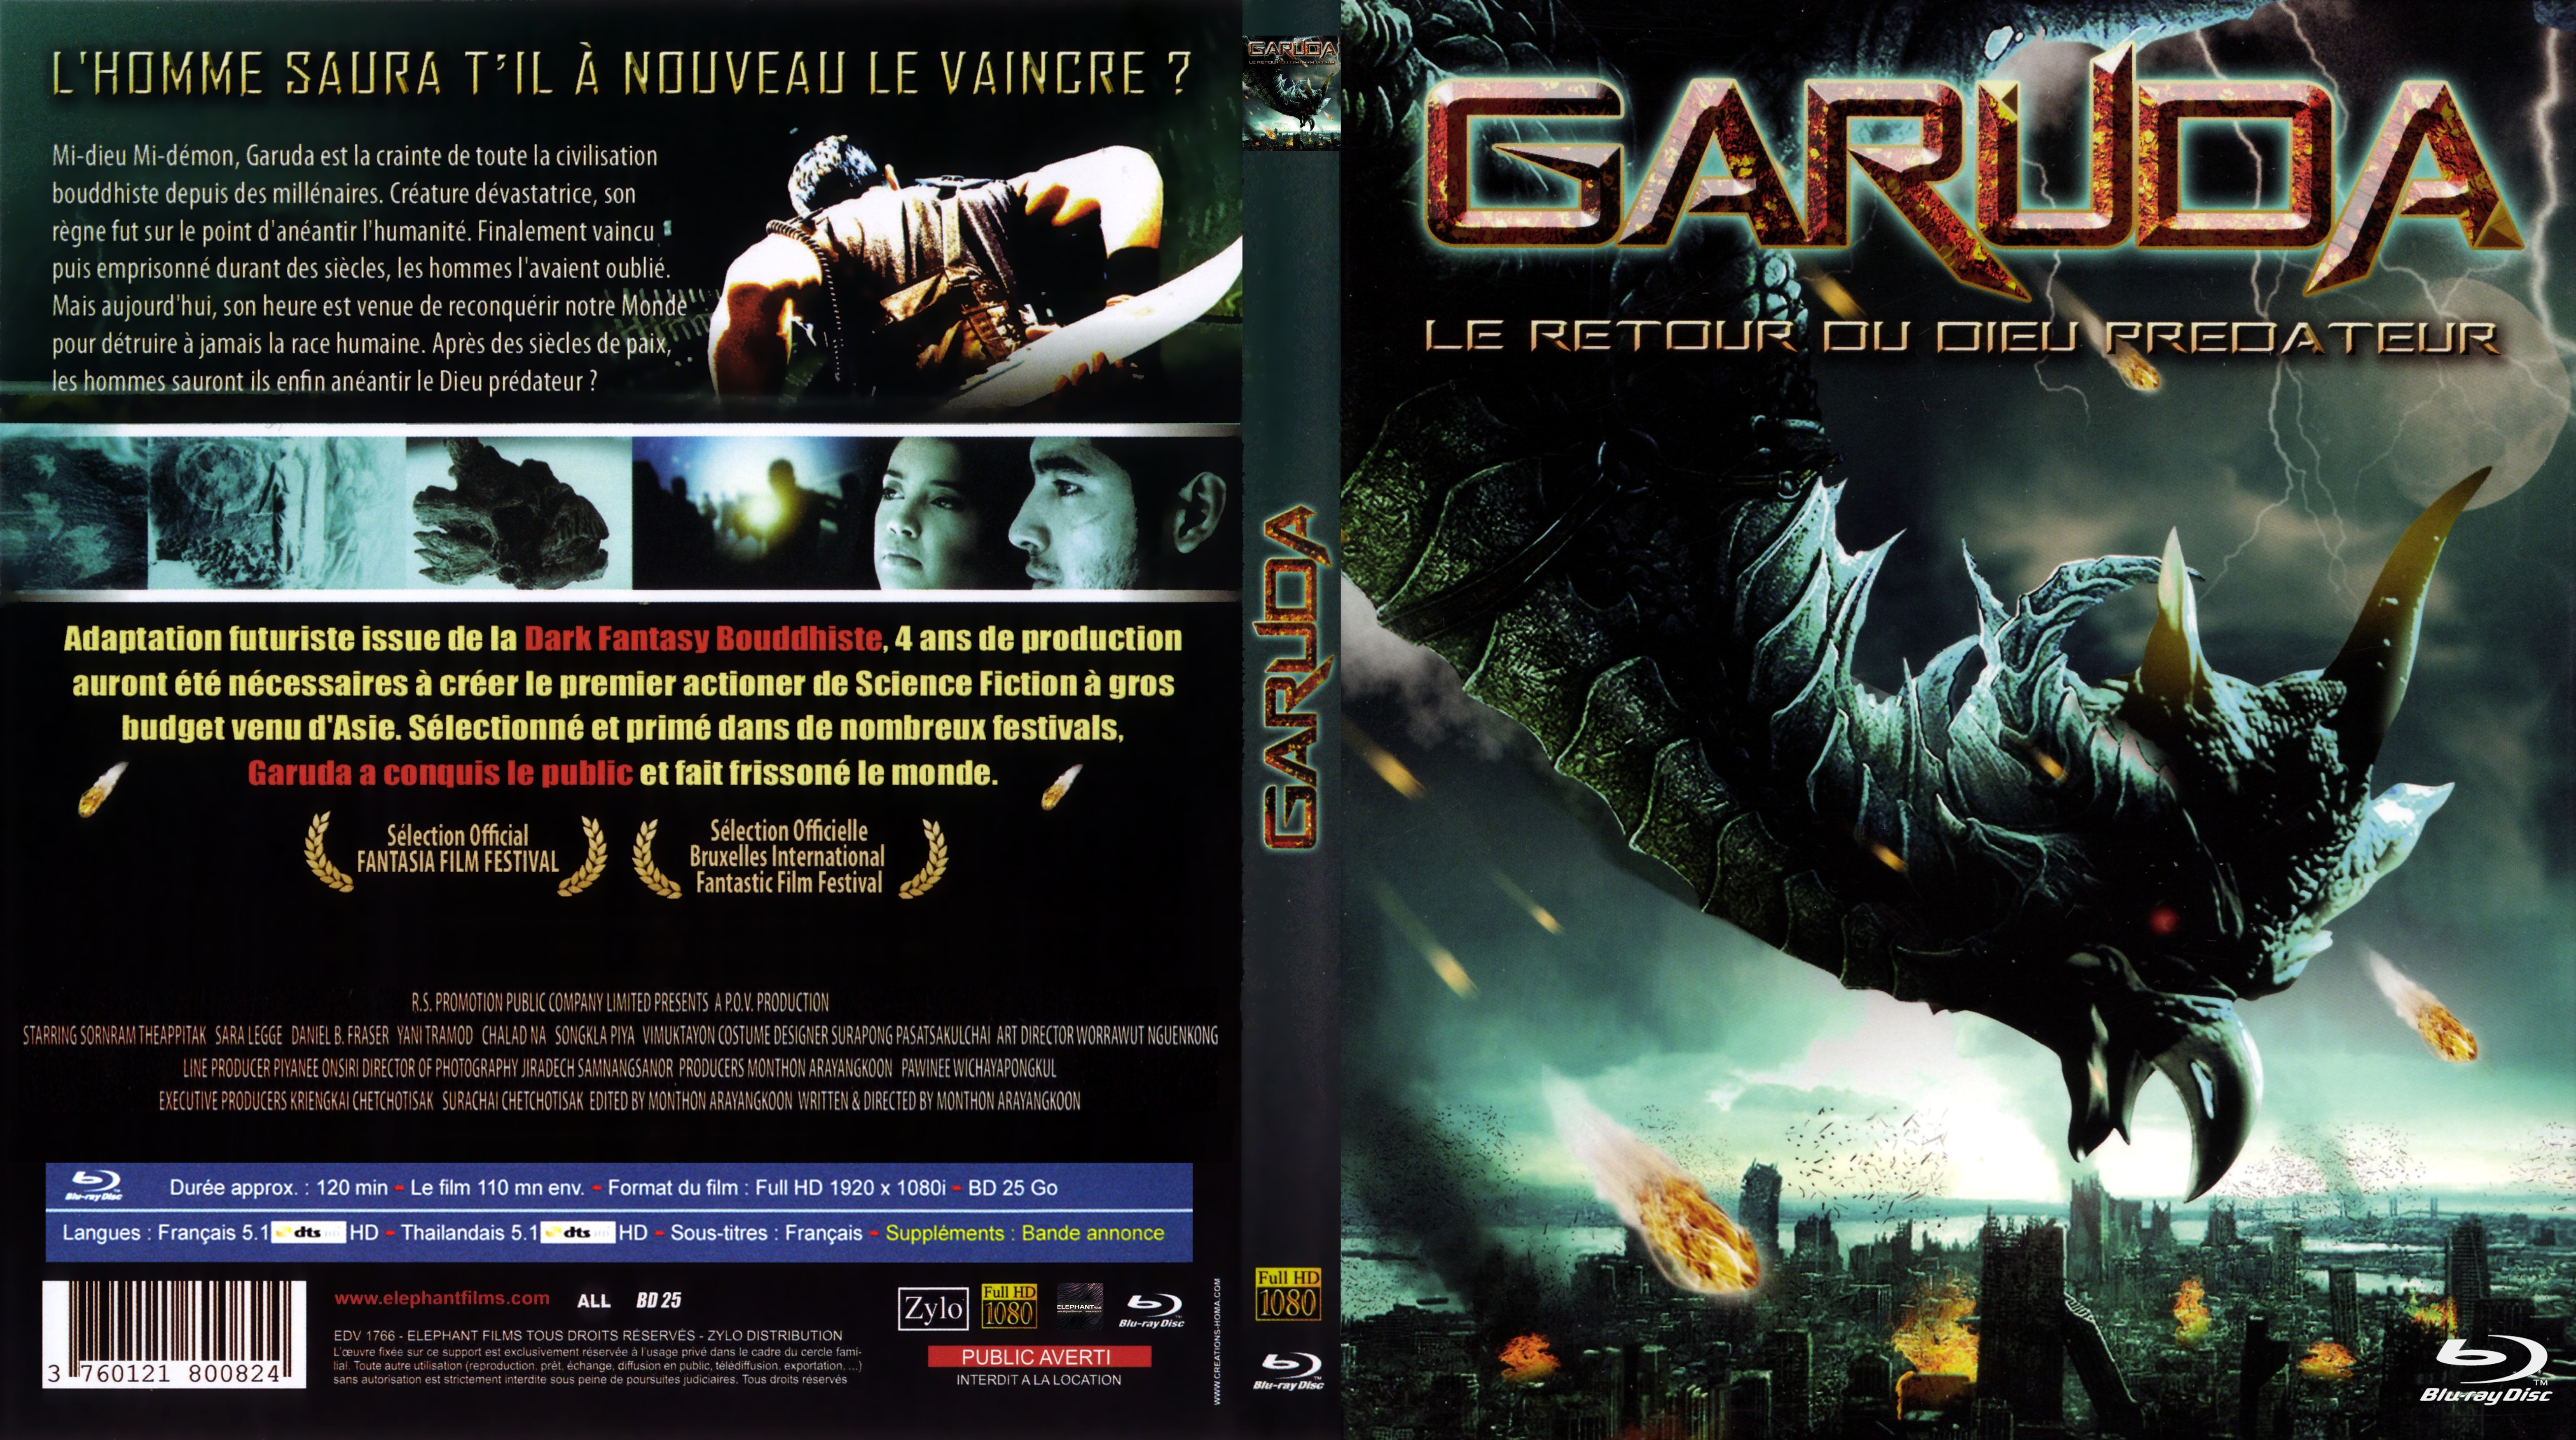 Jaquette DVD Garuda (BLU-RAY) v2